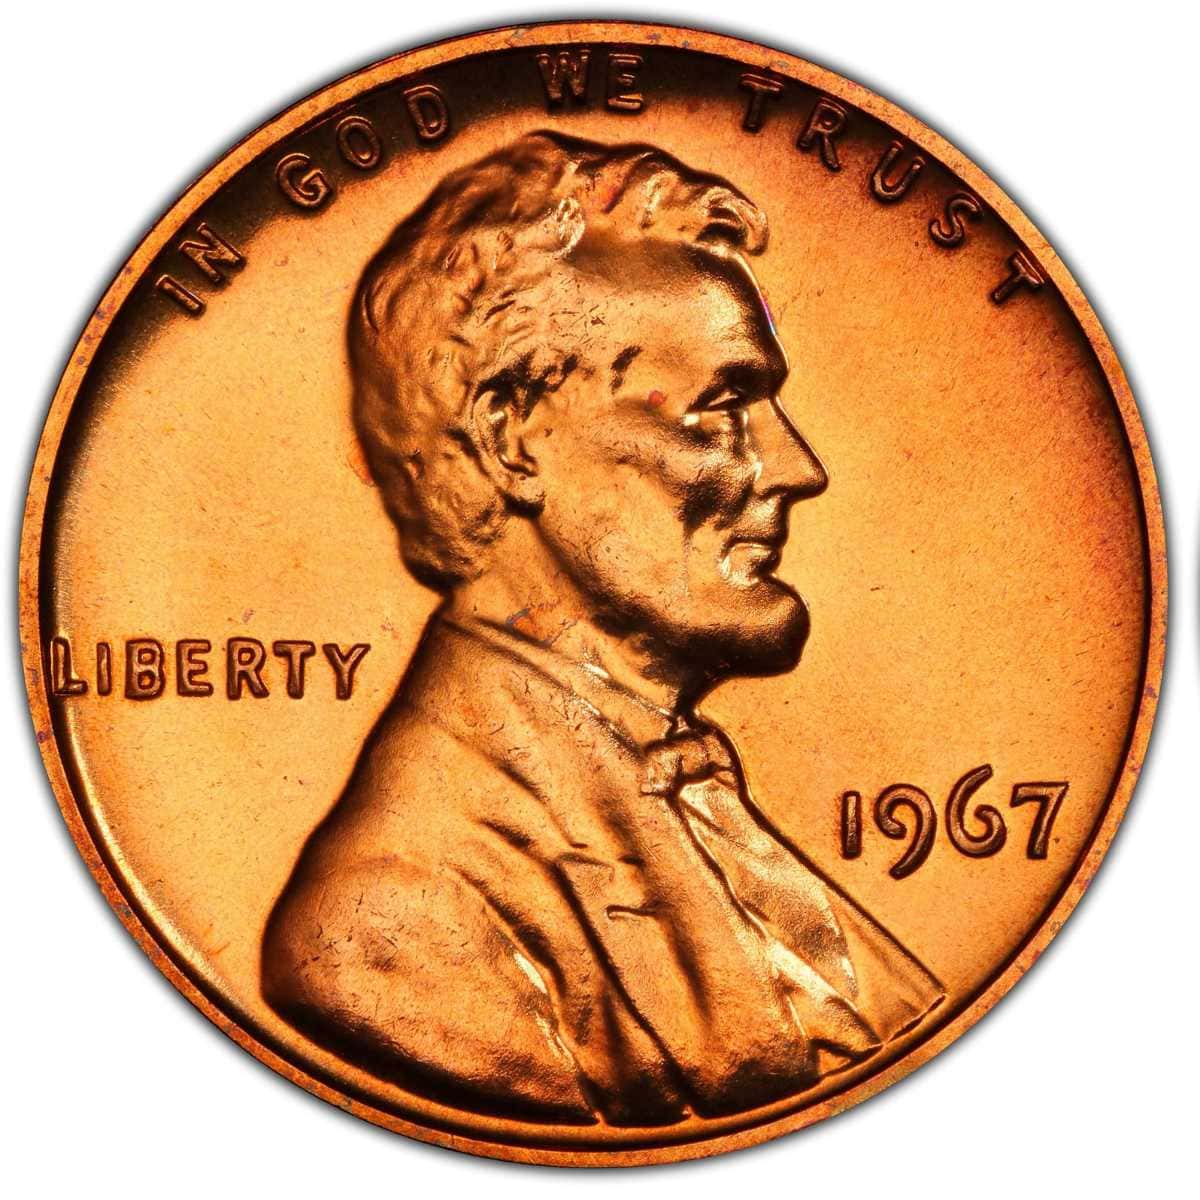 1967 Penny worth